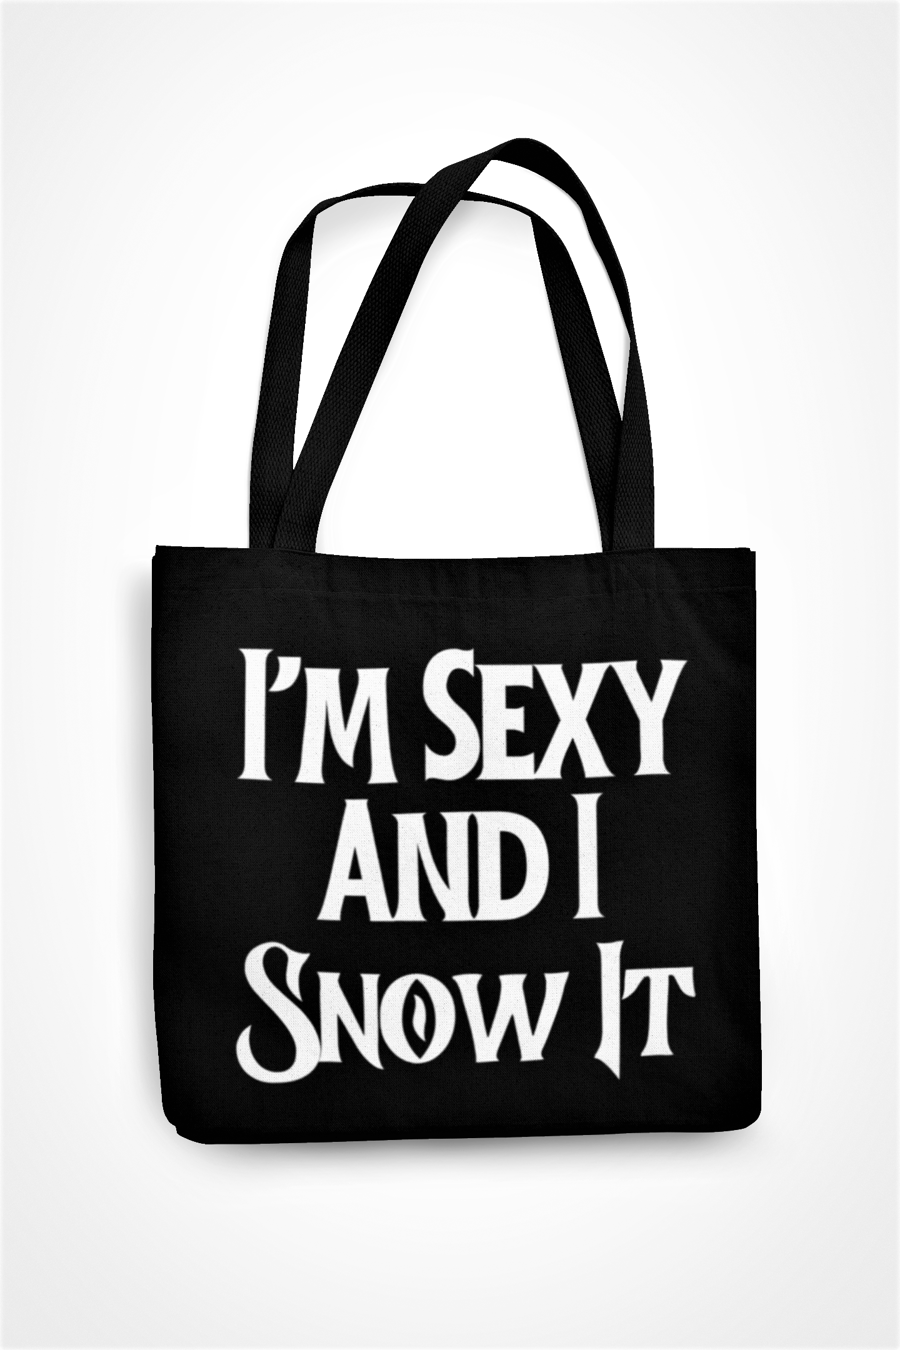 I'm Sexy And I Snow It  - Funny Christmas Tote Bag - Shopper Bag xmas Gift